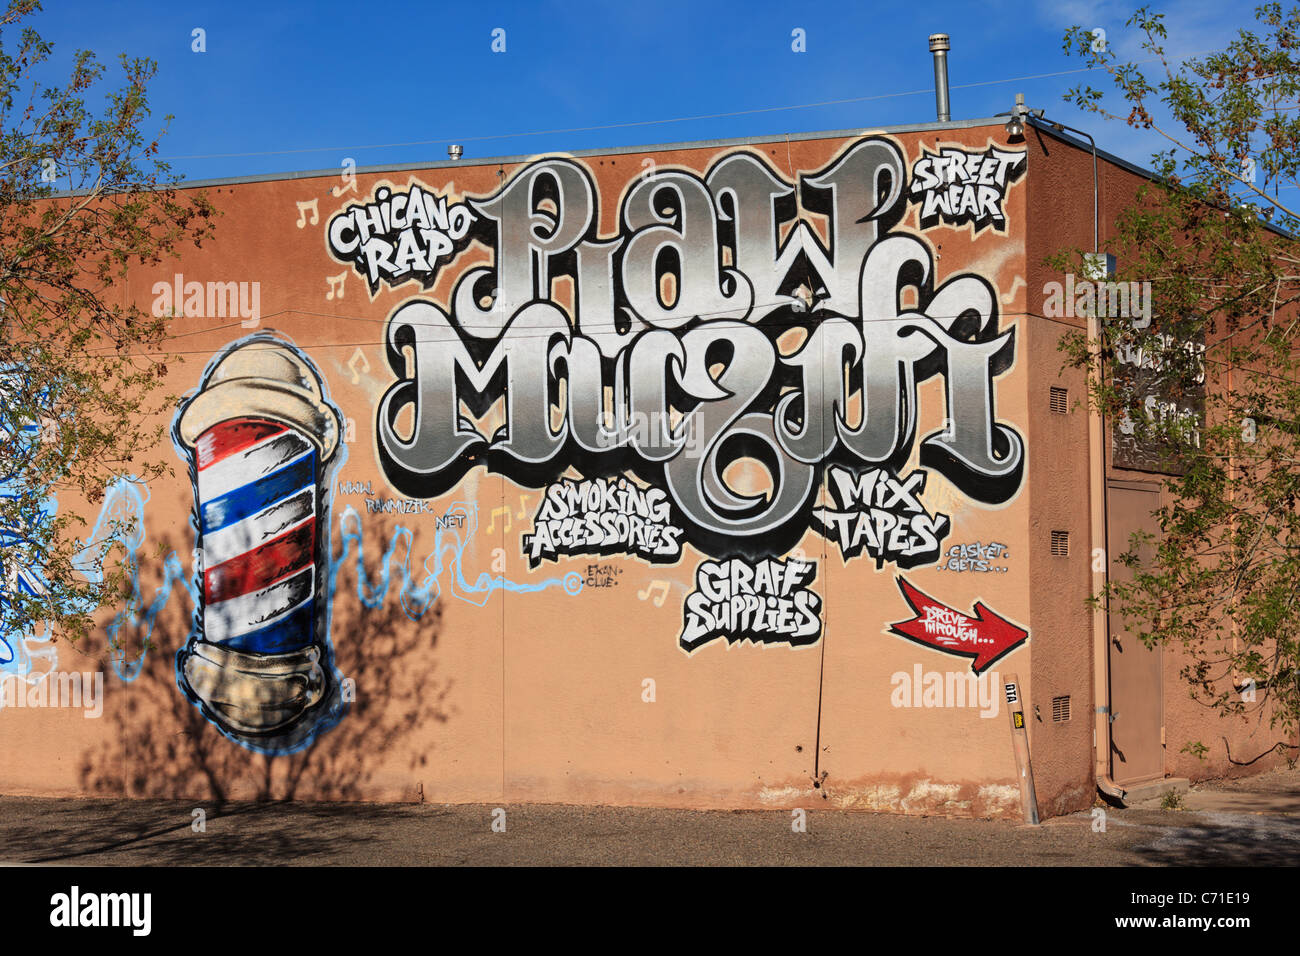 Graffiti anuncio para Raw tienda Muzik, Albuquerque, Nuevo México. Foto de stock